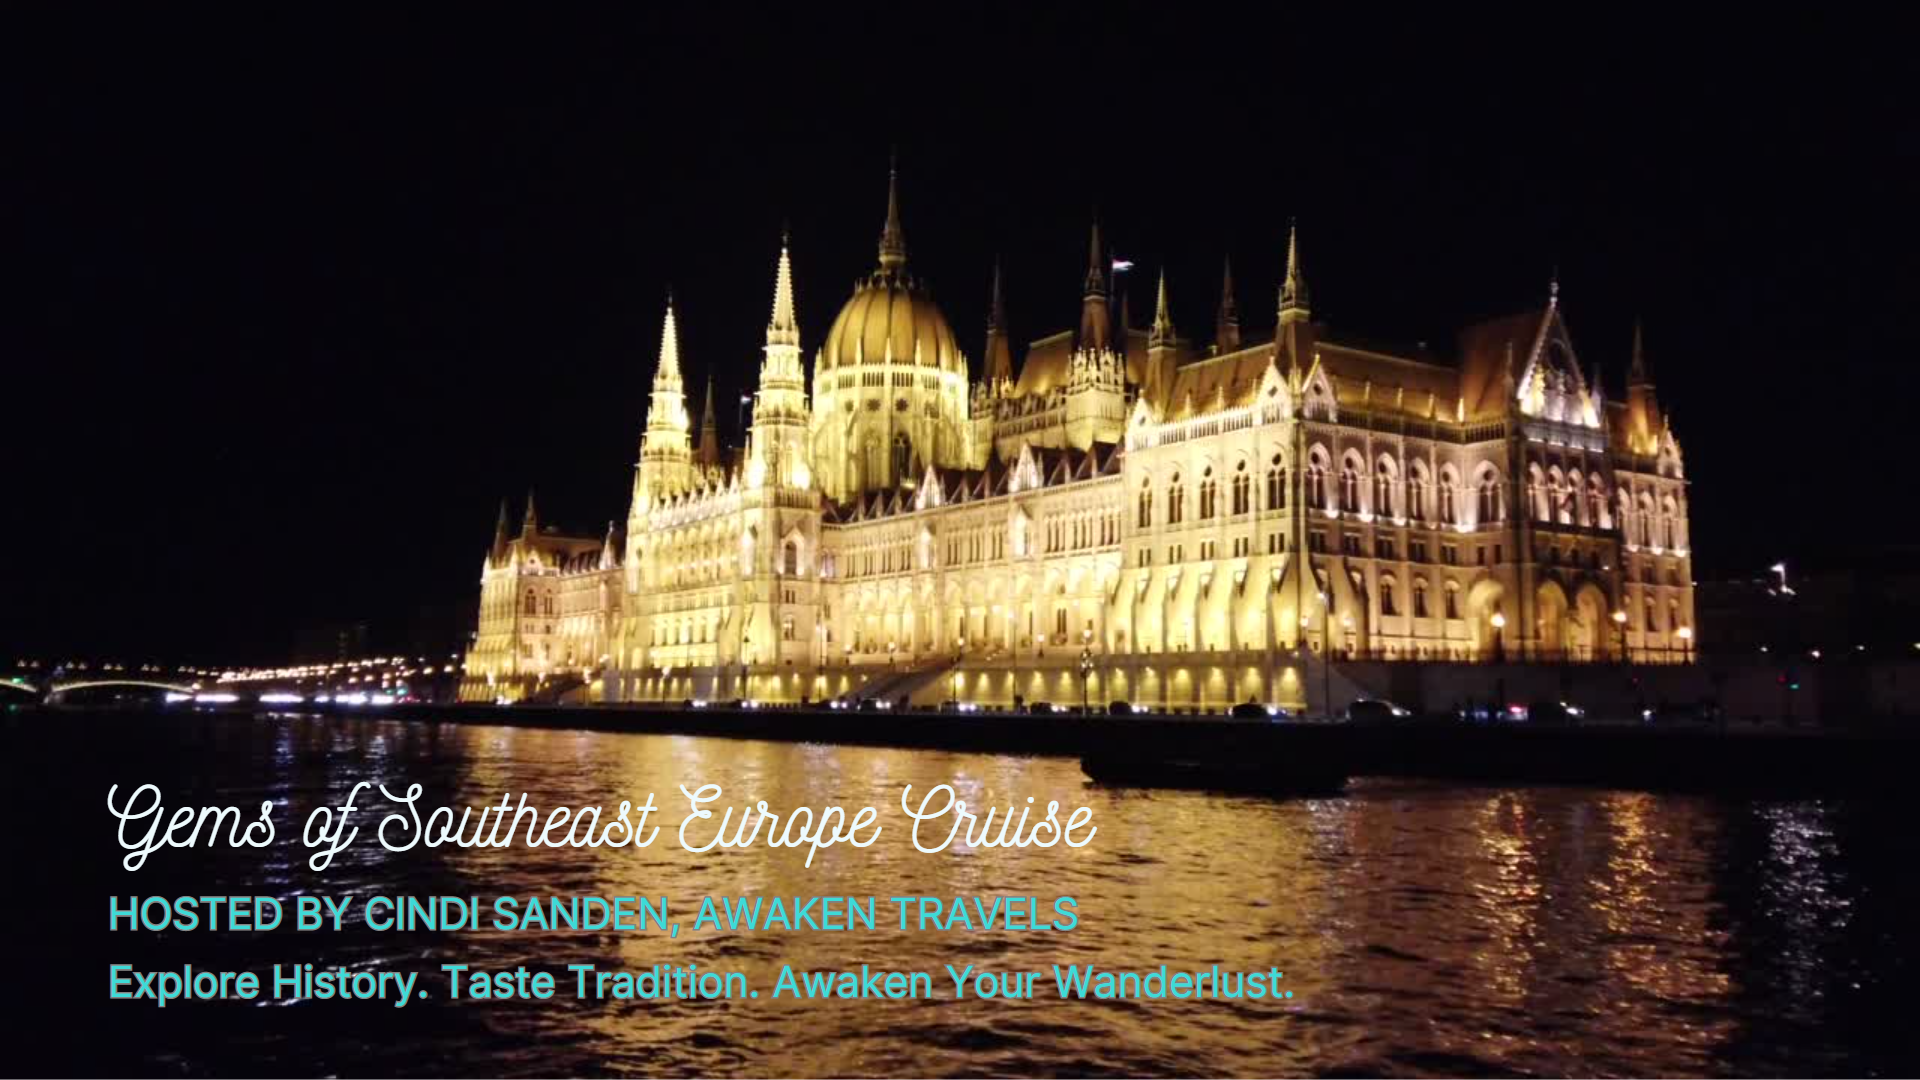 Awaken Travels' Danube Cruise: Uncover Europe's Hidden Gems with Cindi Sanden